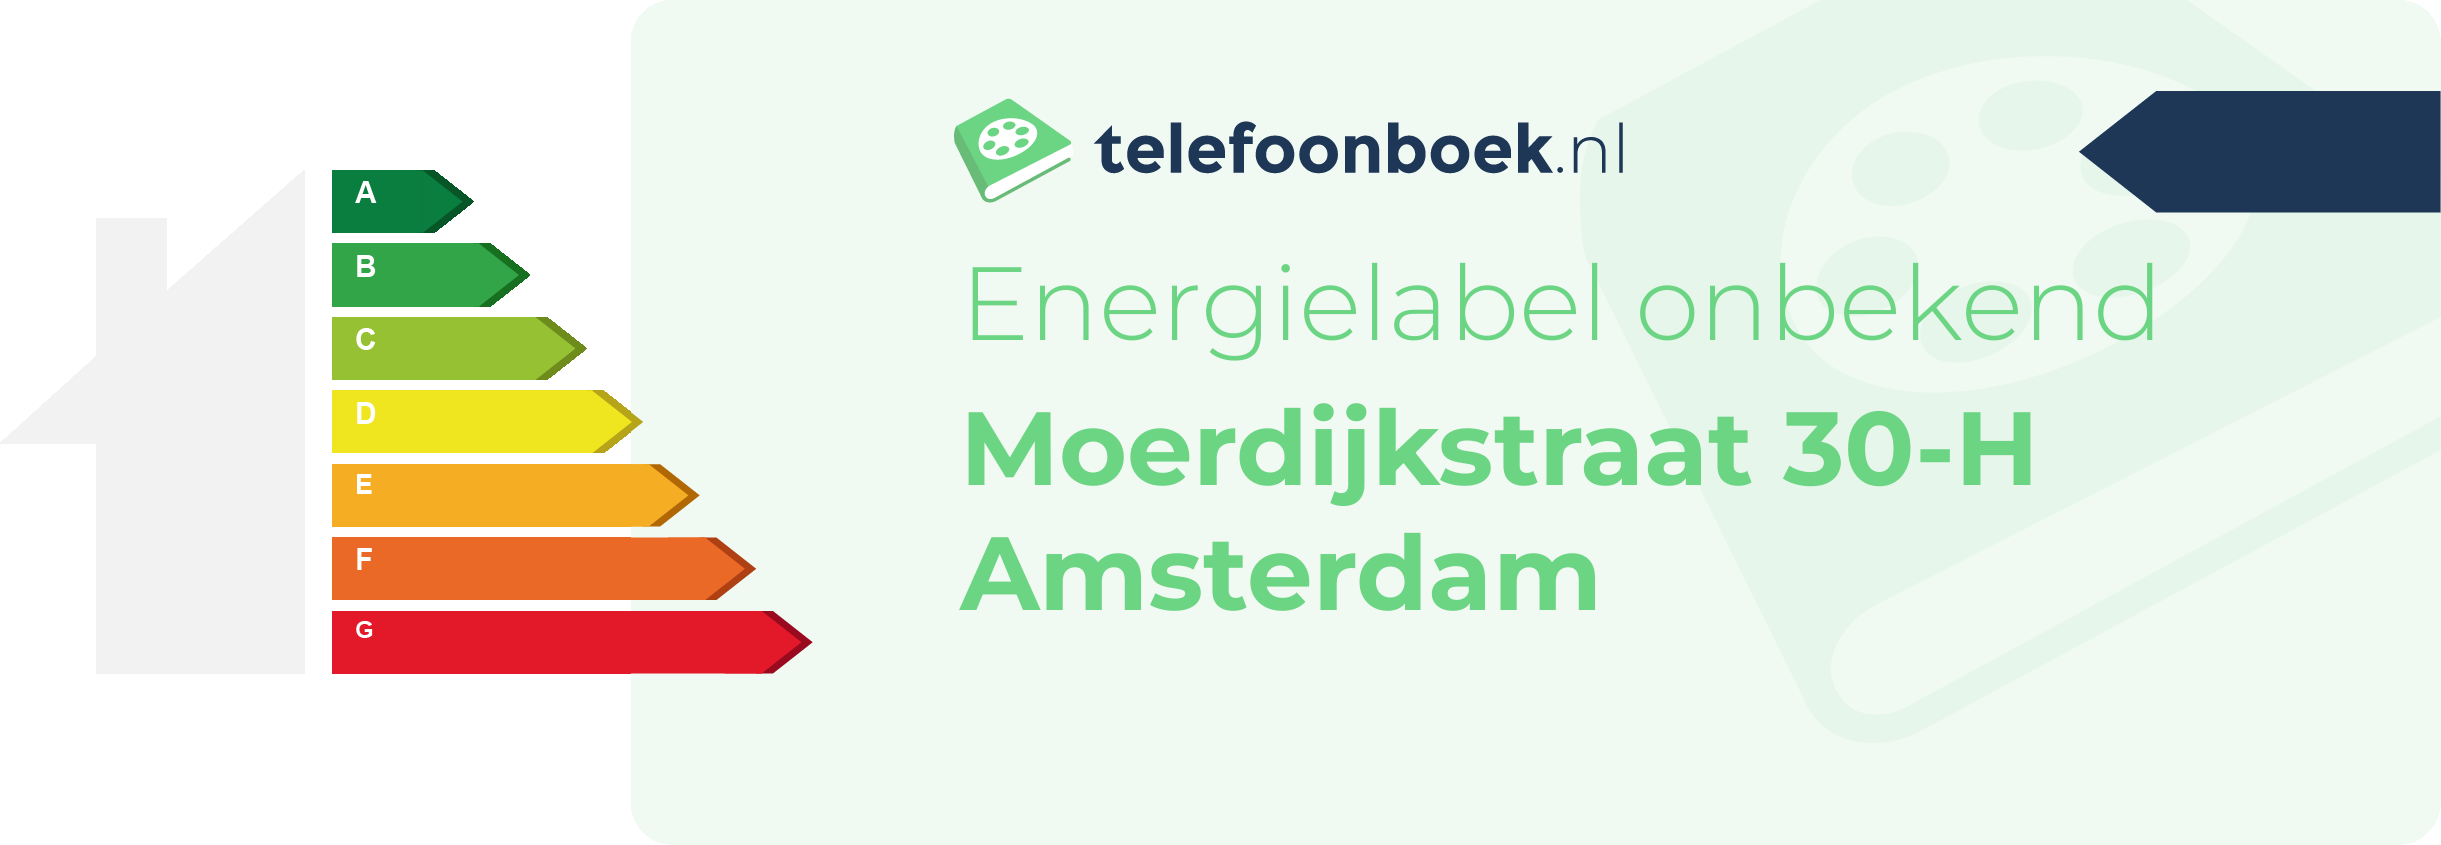 Energielabel Moerdijkstraat 30-H Amsterdam